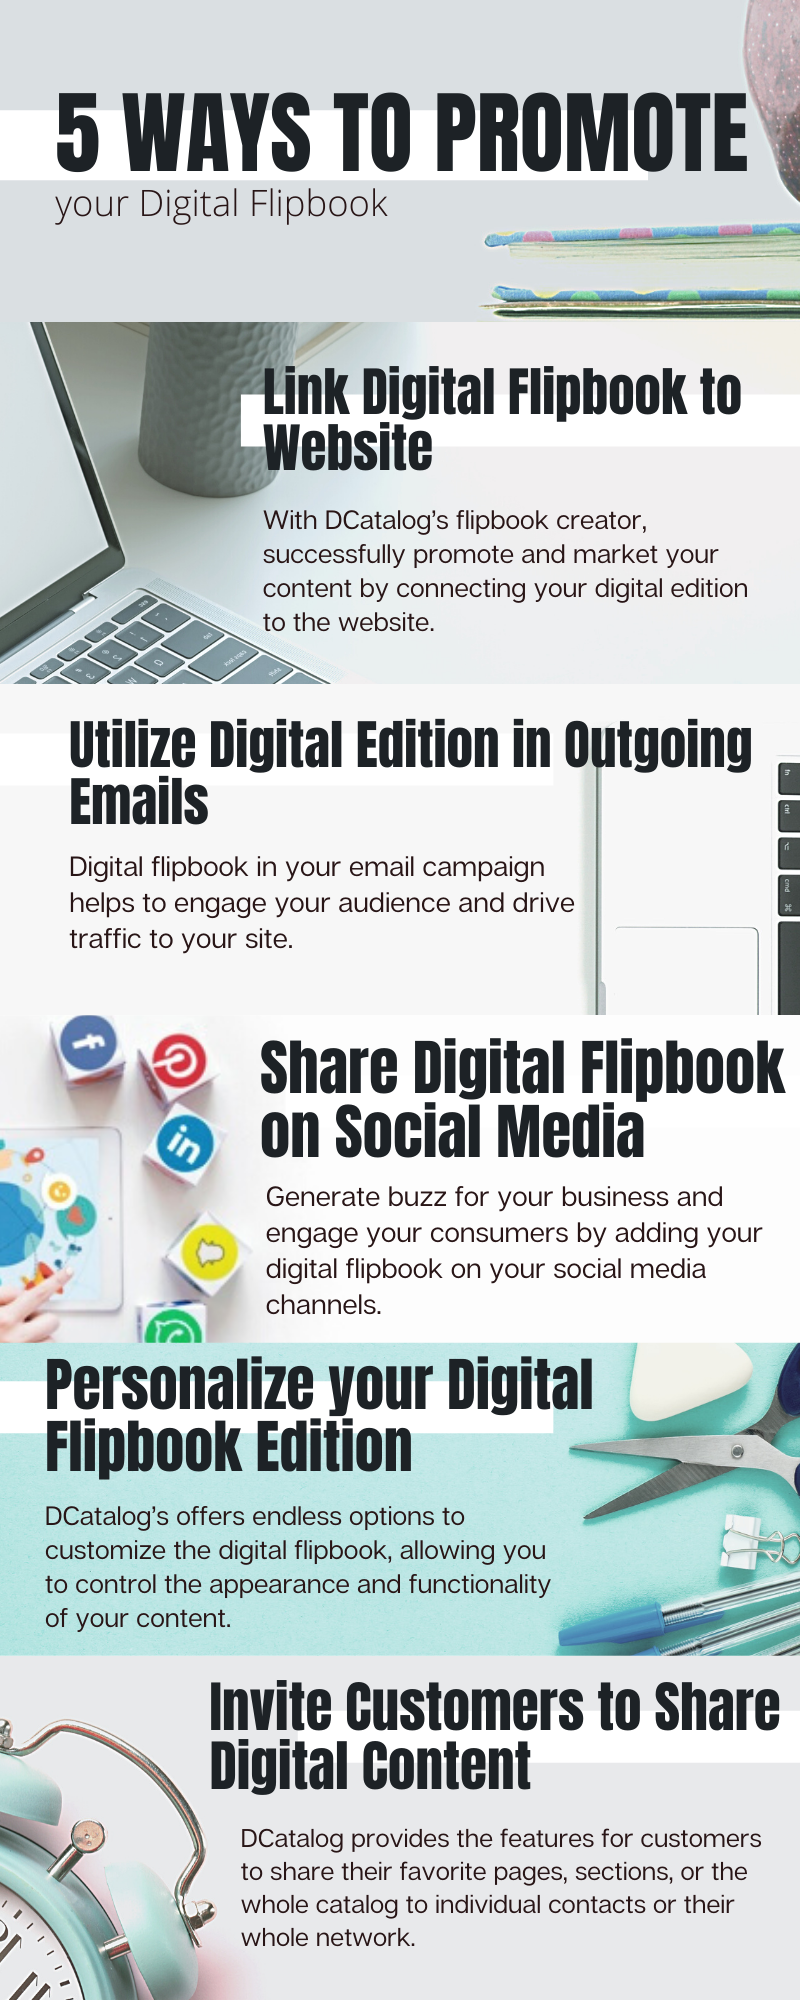 5 ways to promote your Digital Flipbook